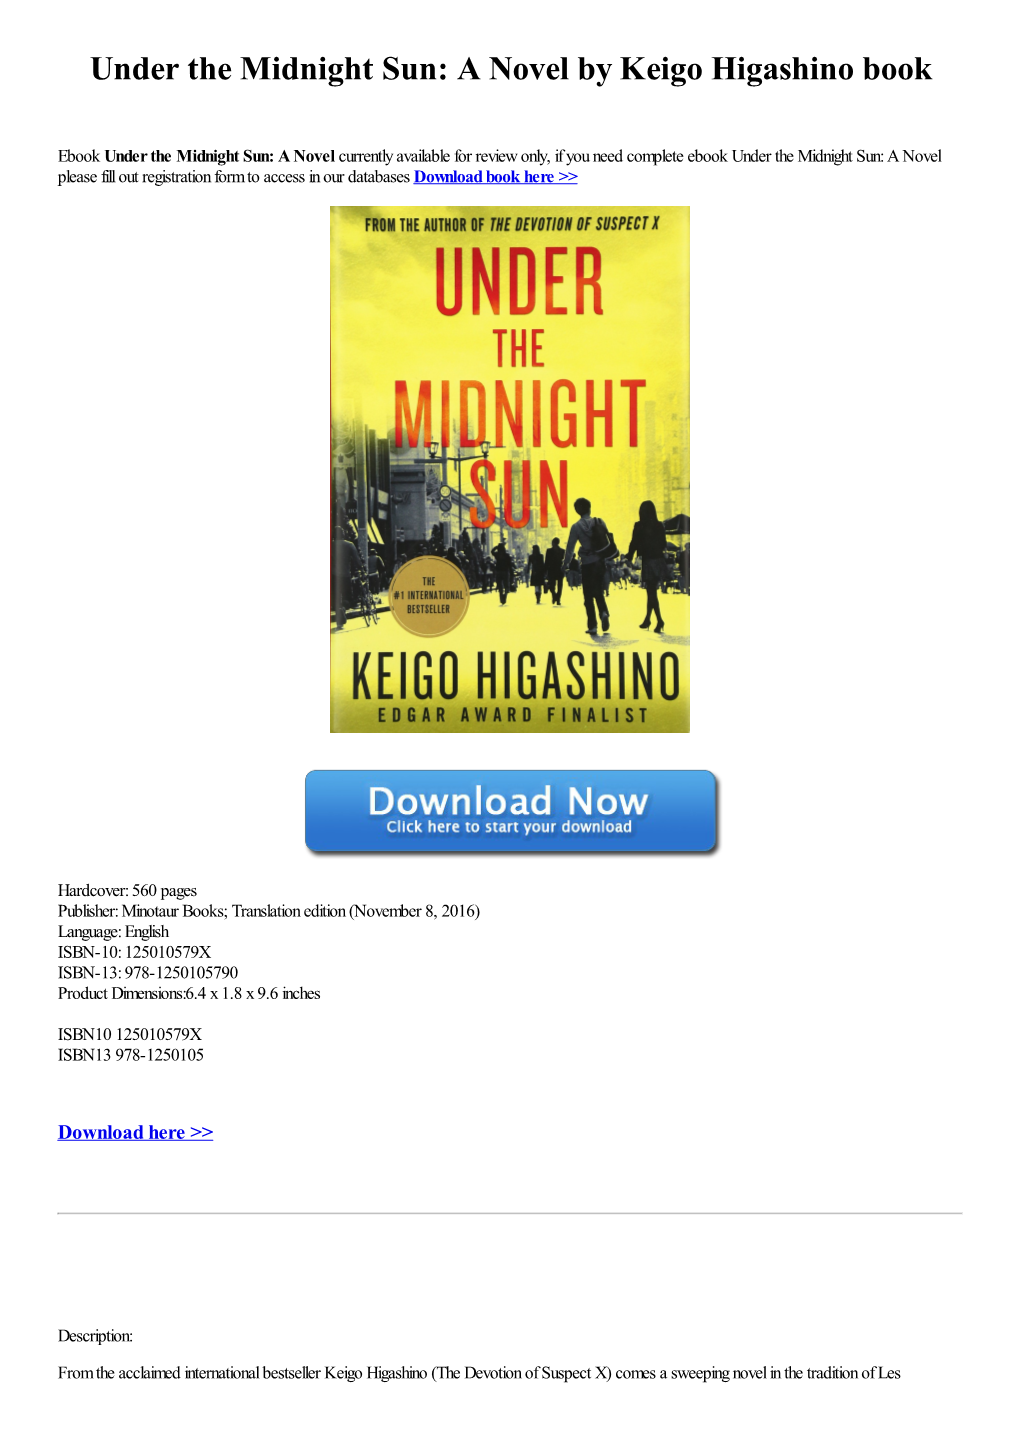 Under the Midnight Sun: a Novel by Keigo Higashino Book